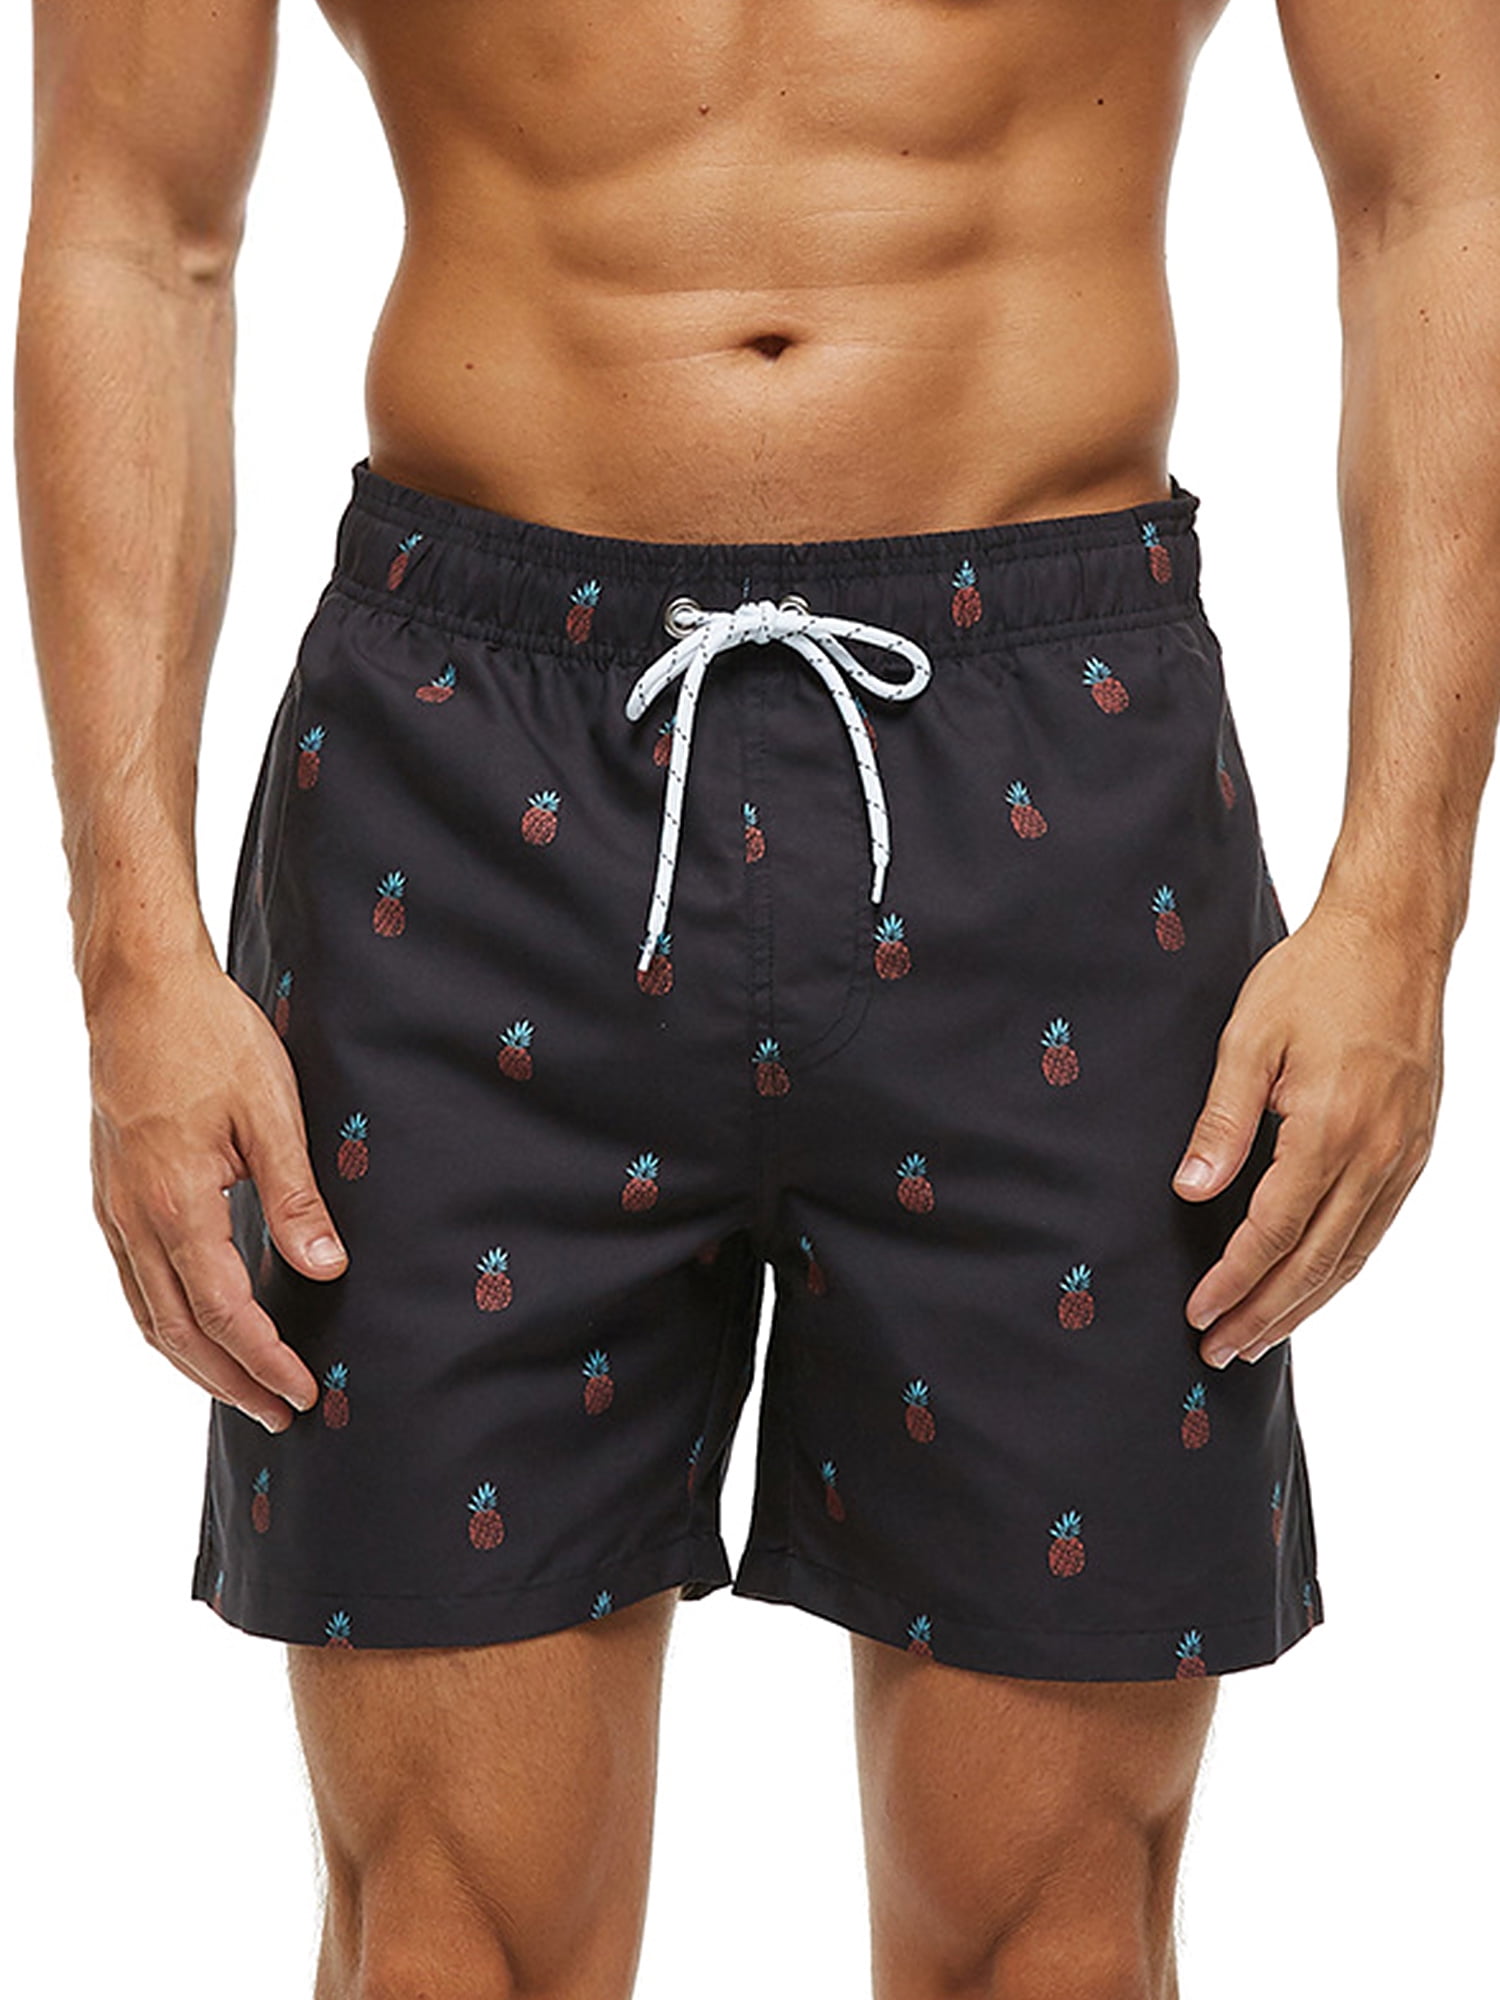 Boy's Swimtrunks Quick-Dry Swim Shorts Casual Beach Shorts Pants Small Size 